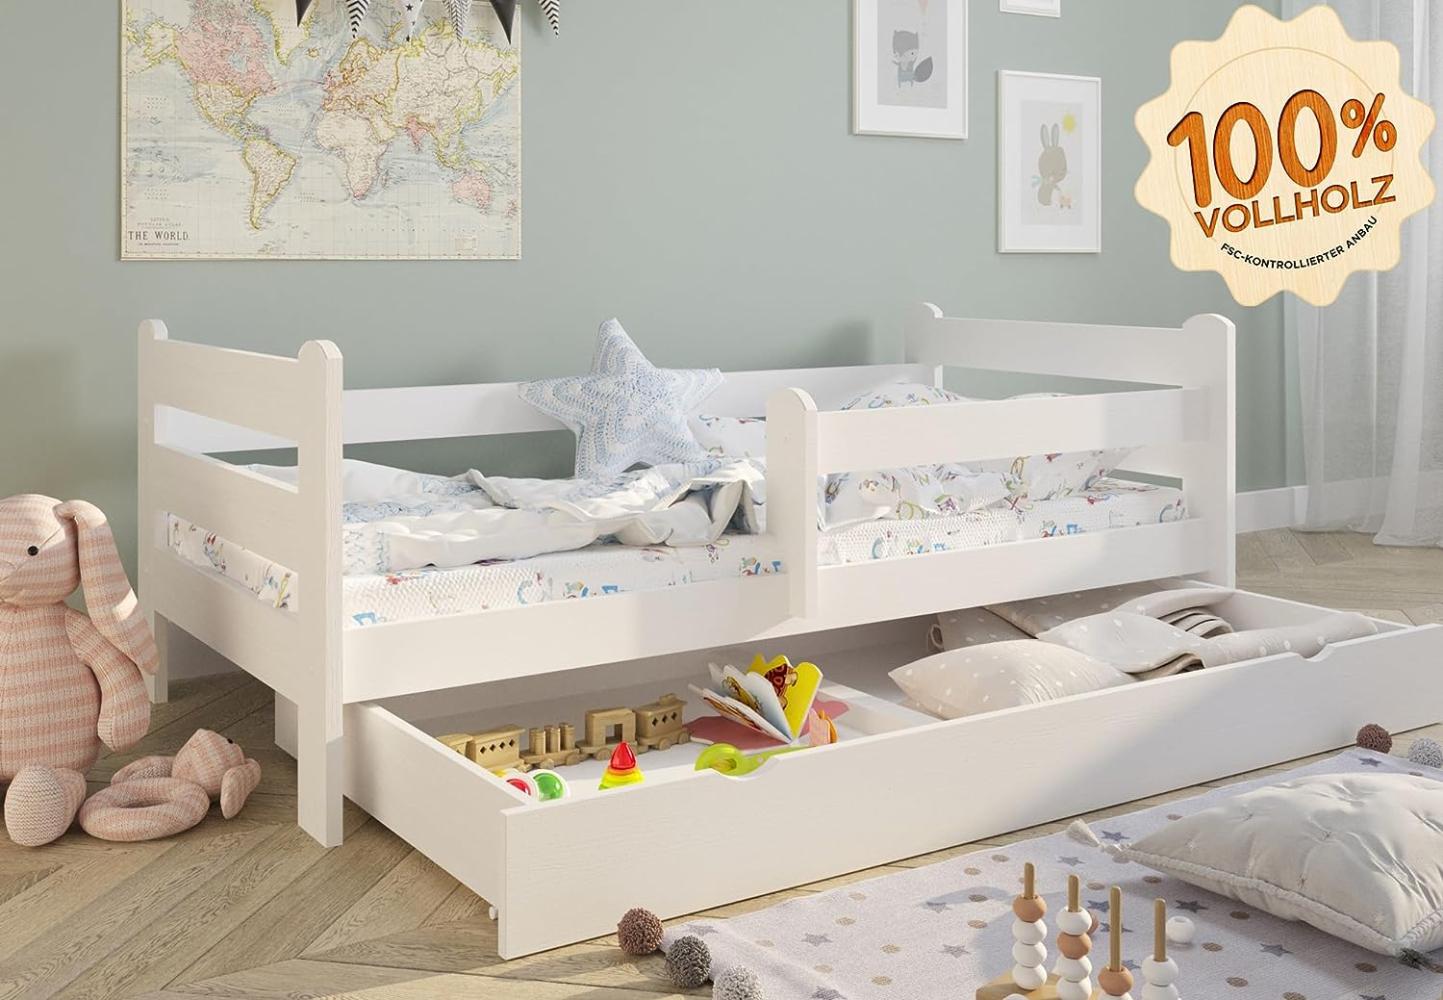 Kinderbett Voll-Holz 160x80 mit Rausfallschutz, Lattenrost & Schublade in weiß Kiefer 80 x 160 Mädchen Jungen Bett Skandi Bild 1